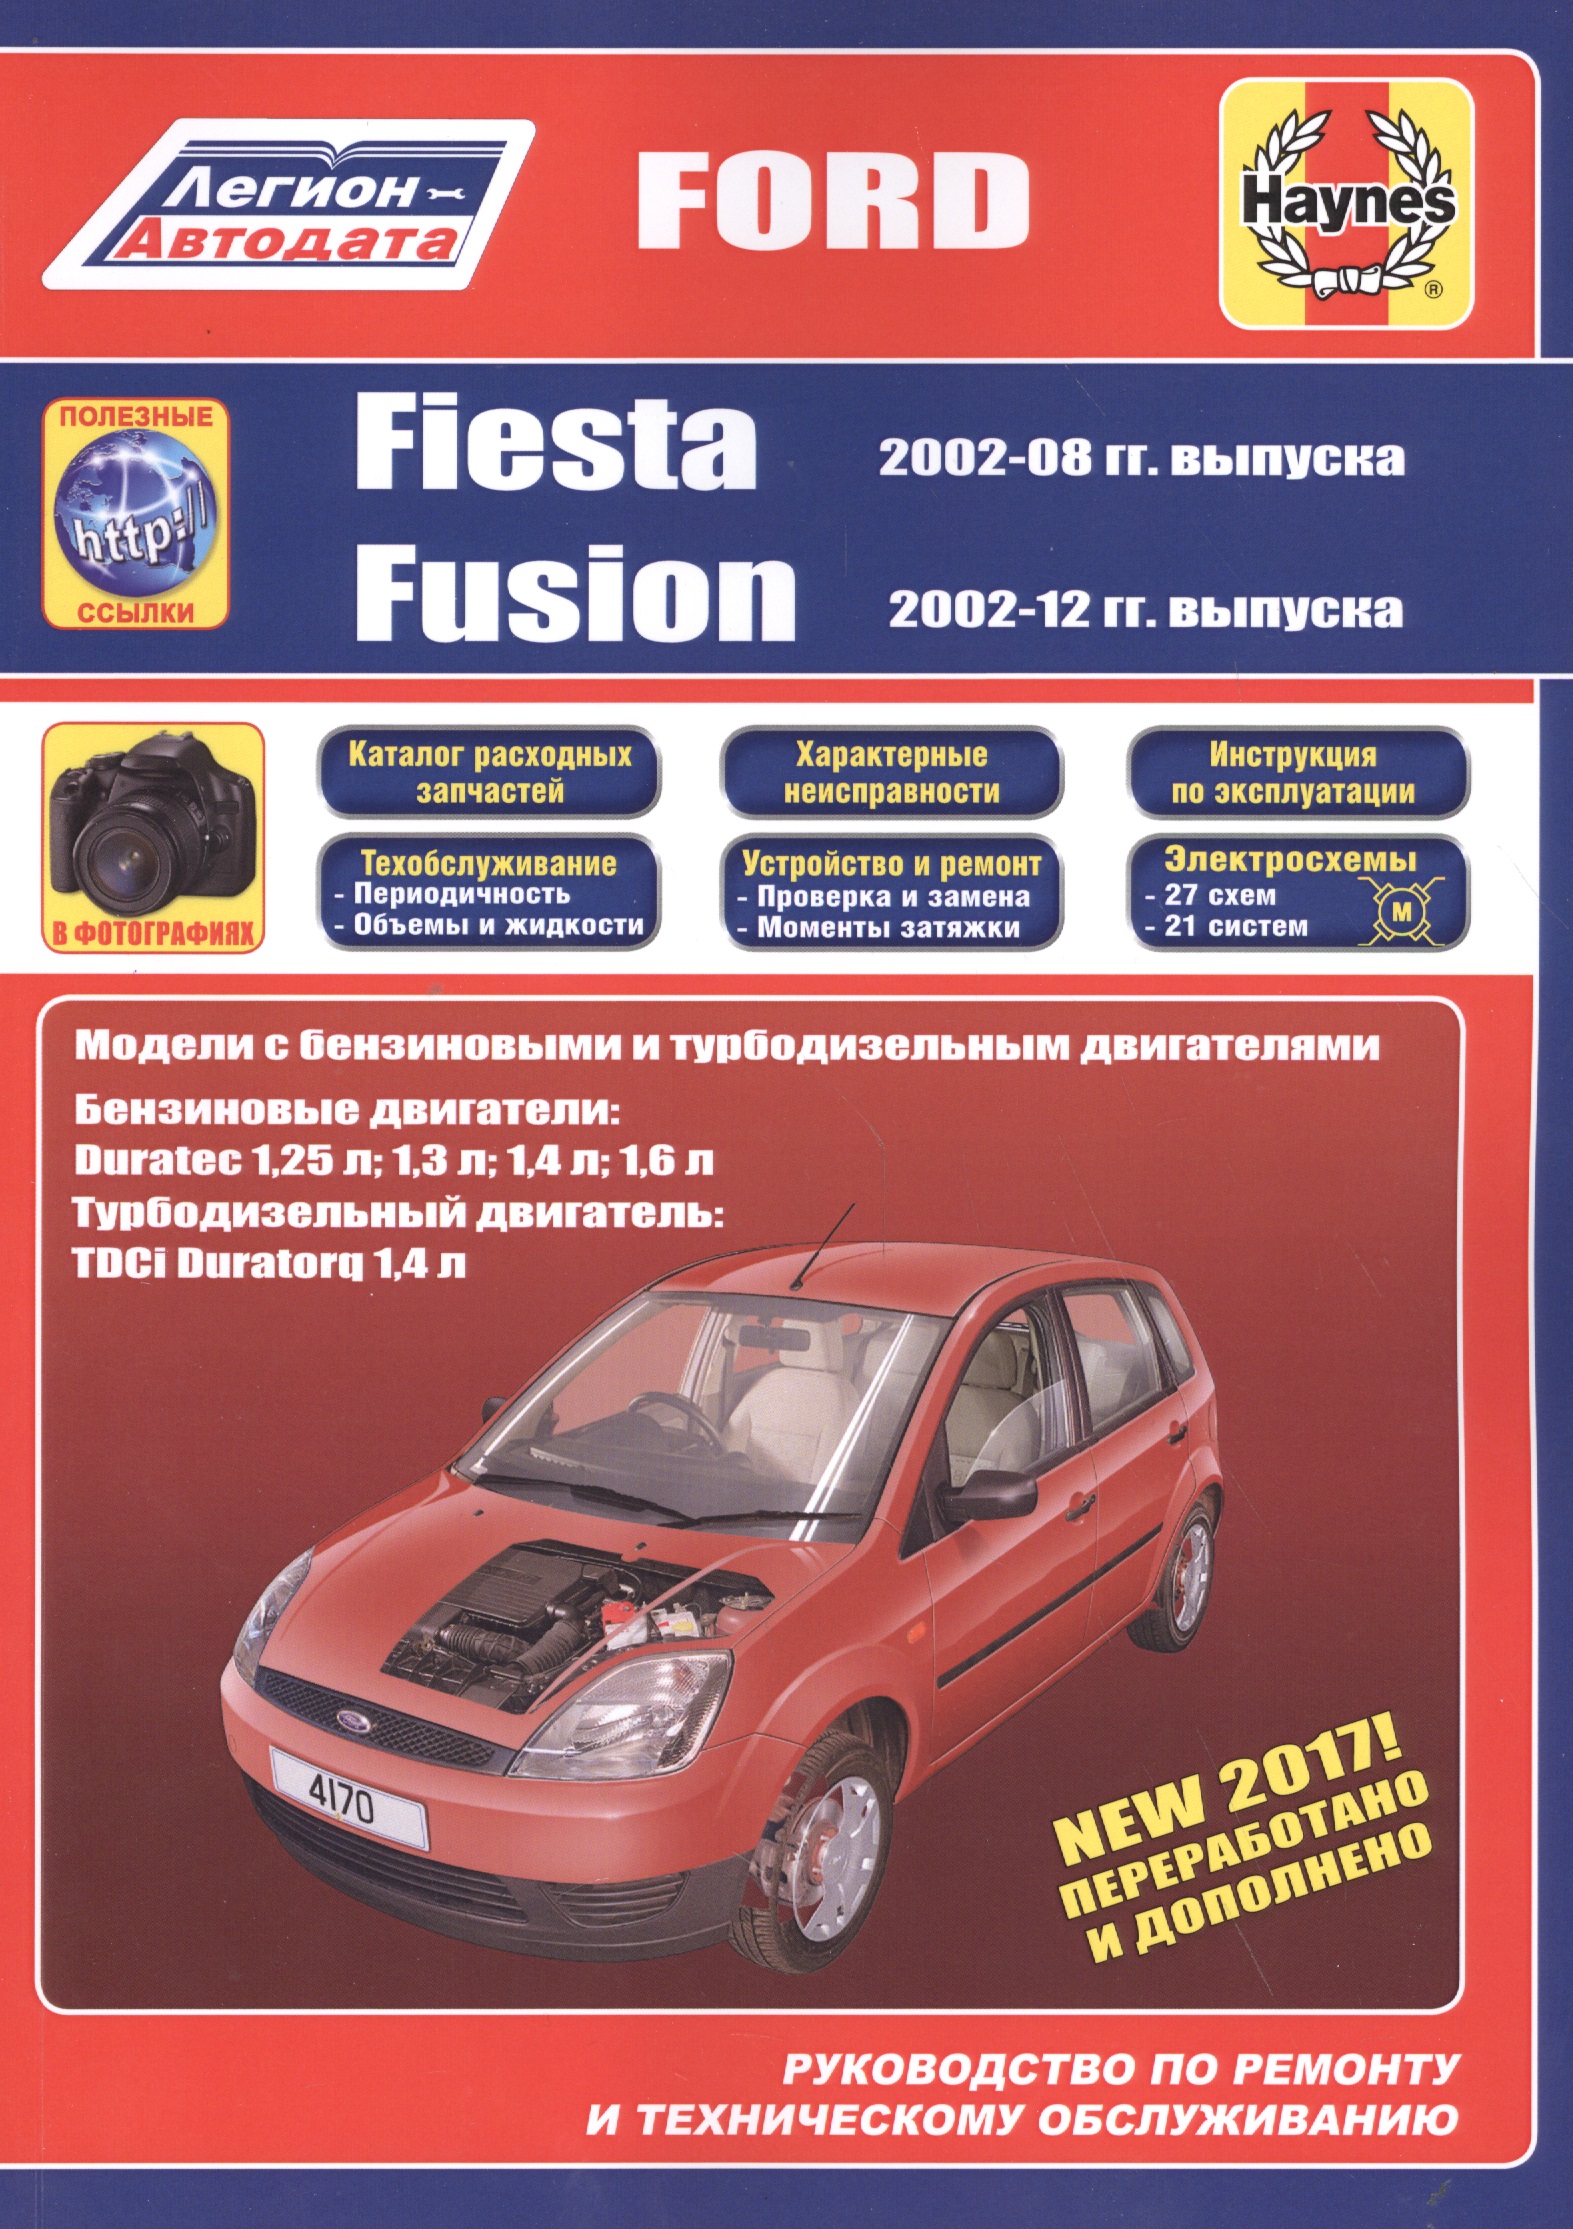 Ford Fiesta & Fusion 2002-08/12 бензин и дизель. Ремонт. Эксплуатация. ТО (ч/б фотографии+Каталог расходных з/ч, Характерные неисправности) рамка переходная incar rfo n07s ford focus2 fusion fiesta крепеж